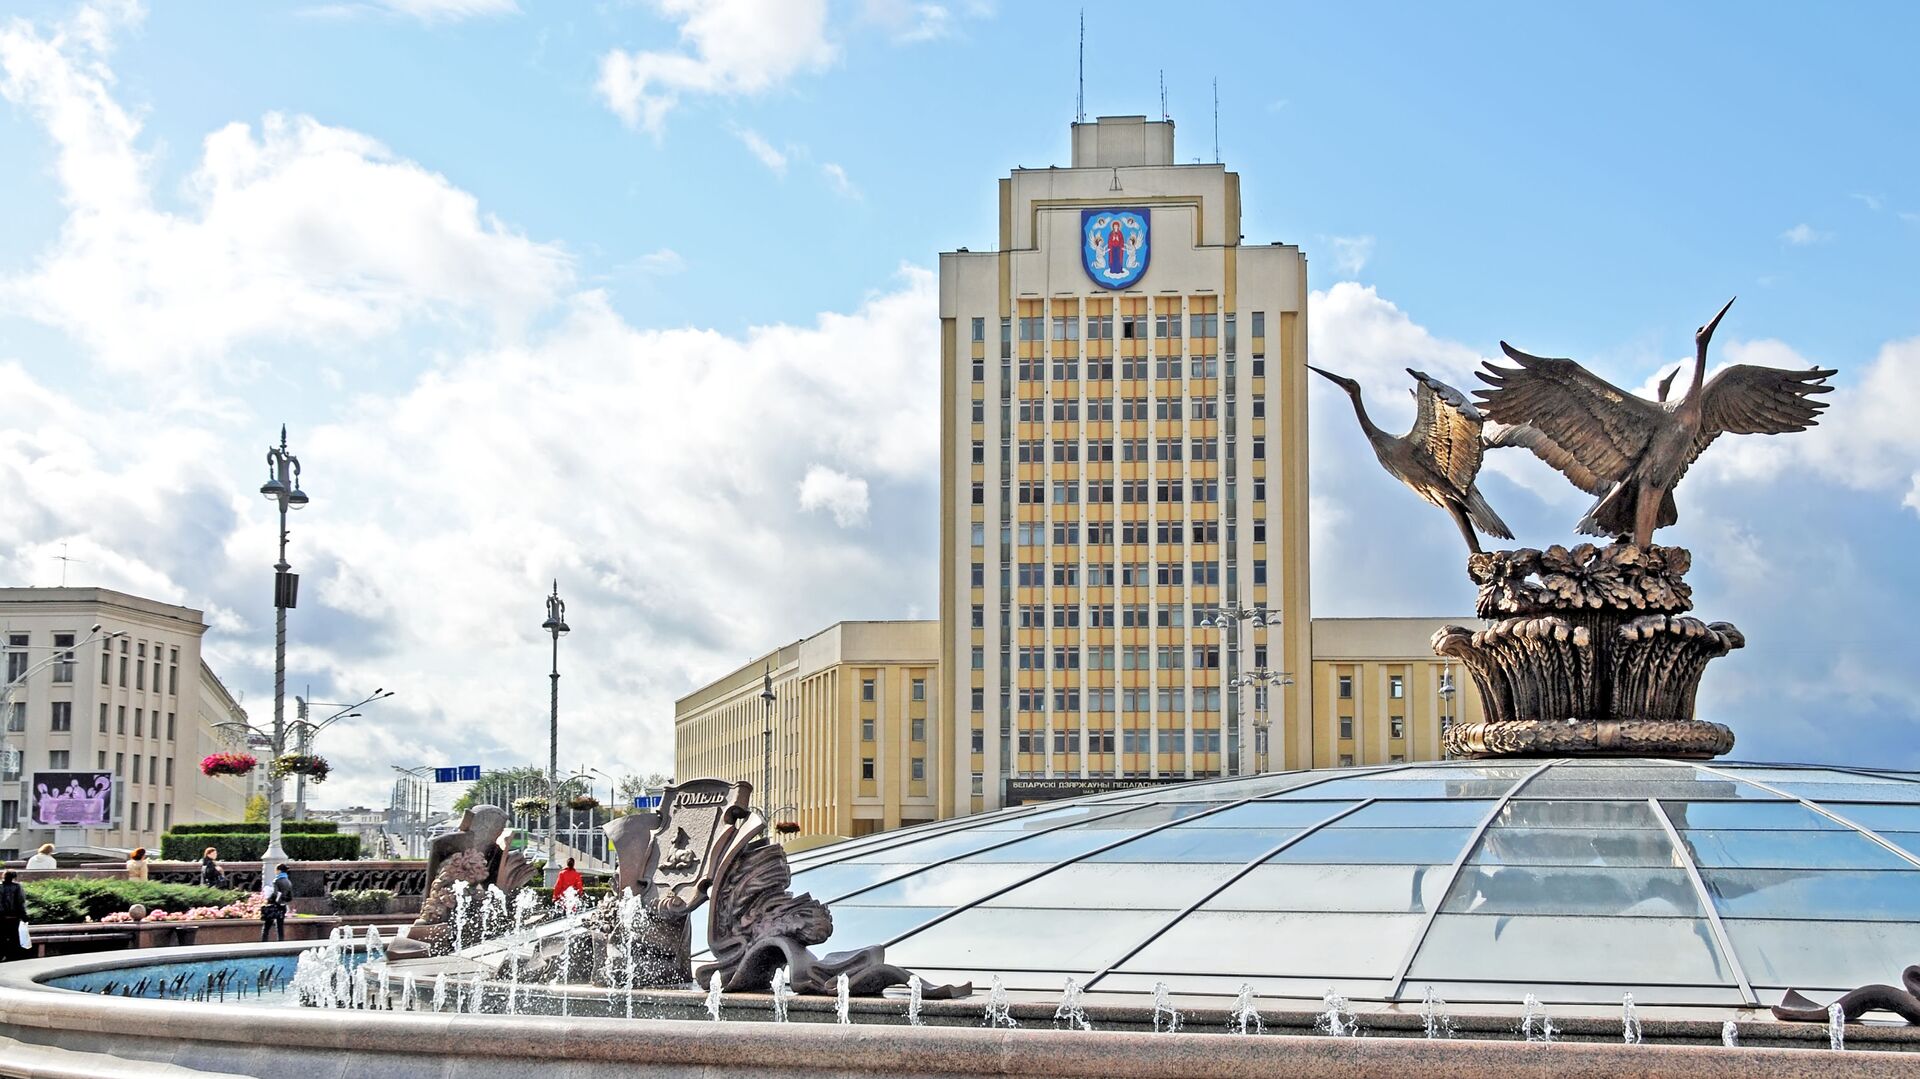 Площадь Независимости в Минске, Белоруссия - Sputnik Србија, 1920, 24.05.2021